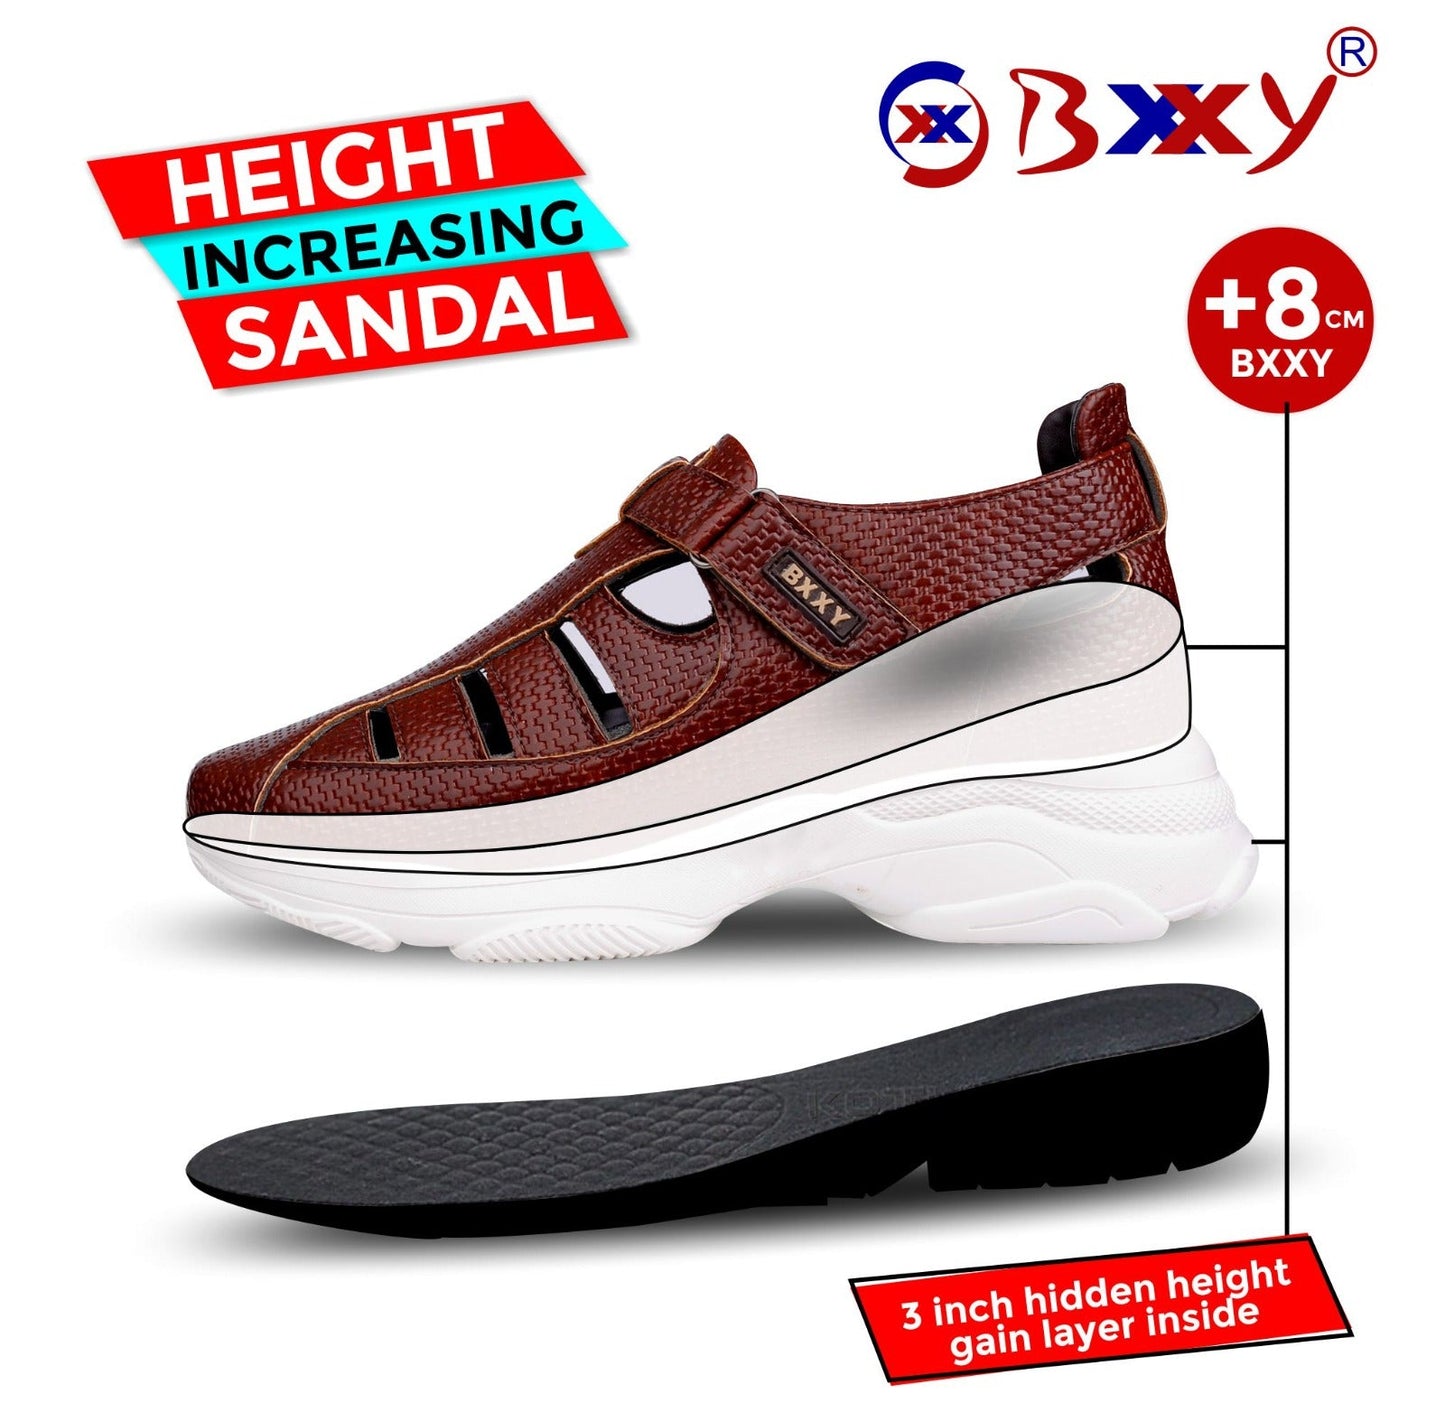 Men's 3 Inch Hidden Height Increasing Latest Casual Sandals